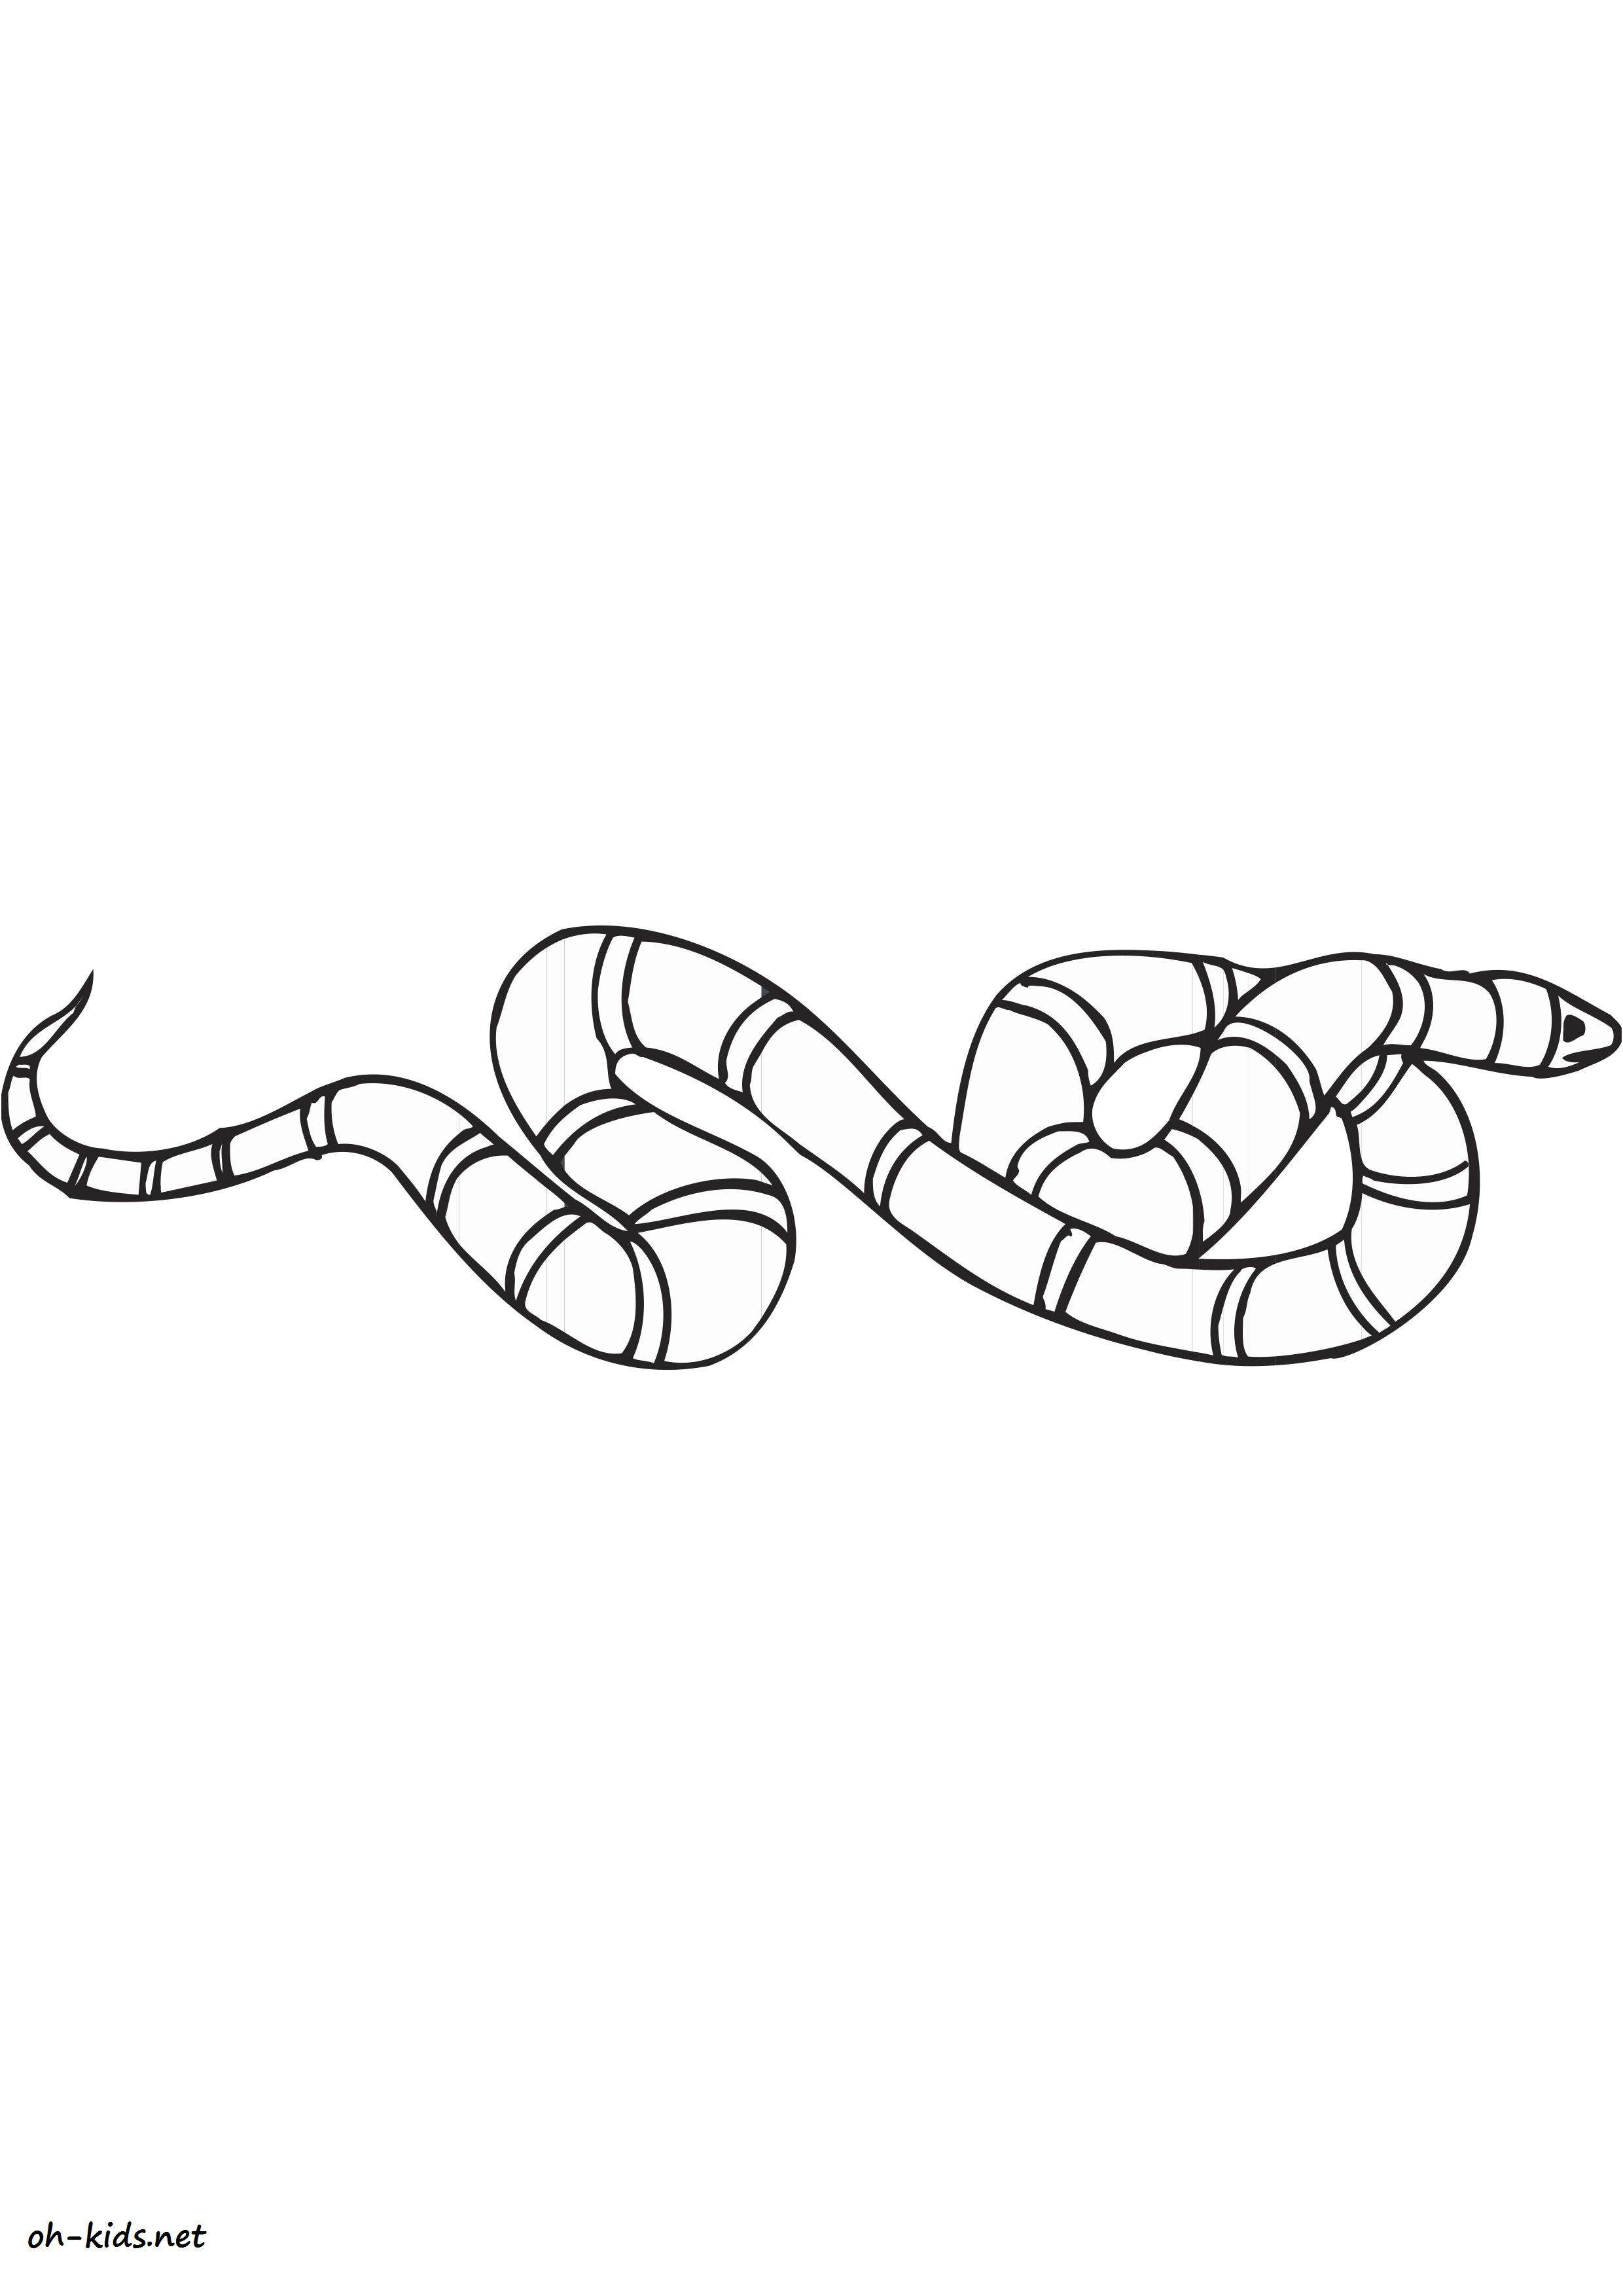 dessin 1084 coloriage serpent imprimer oh kids net